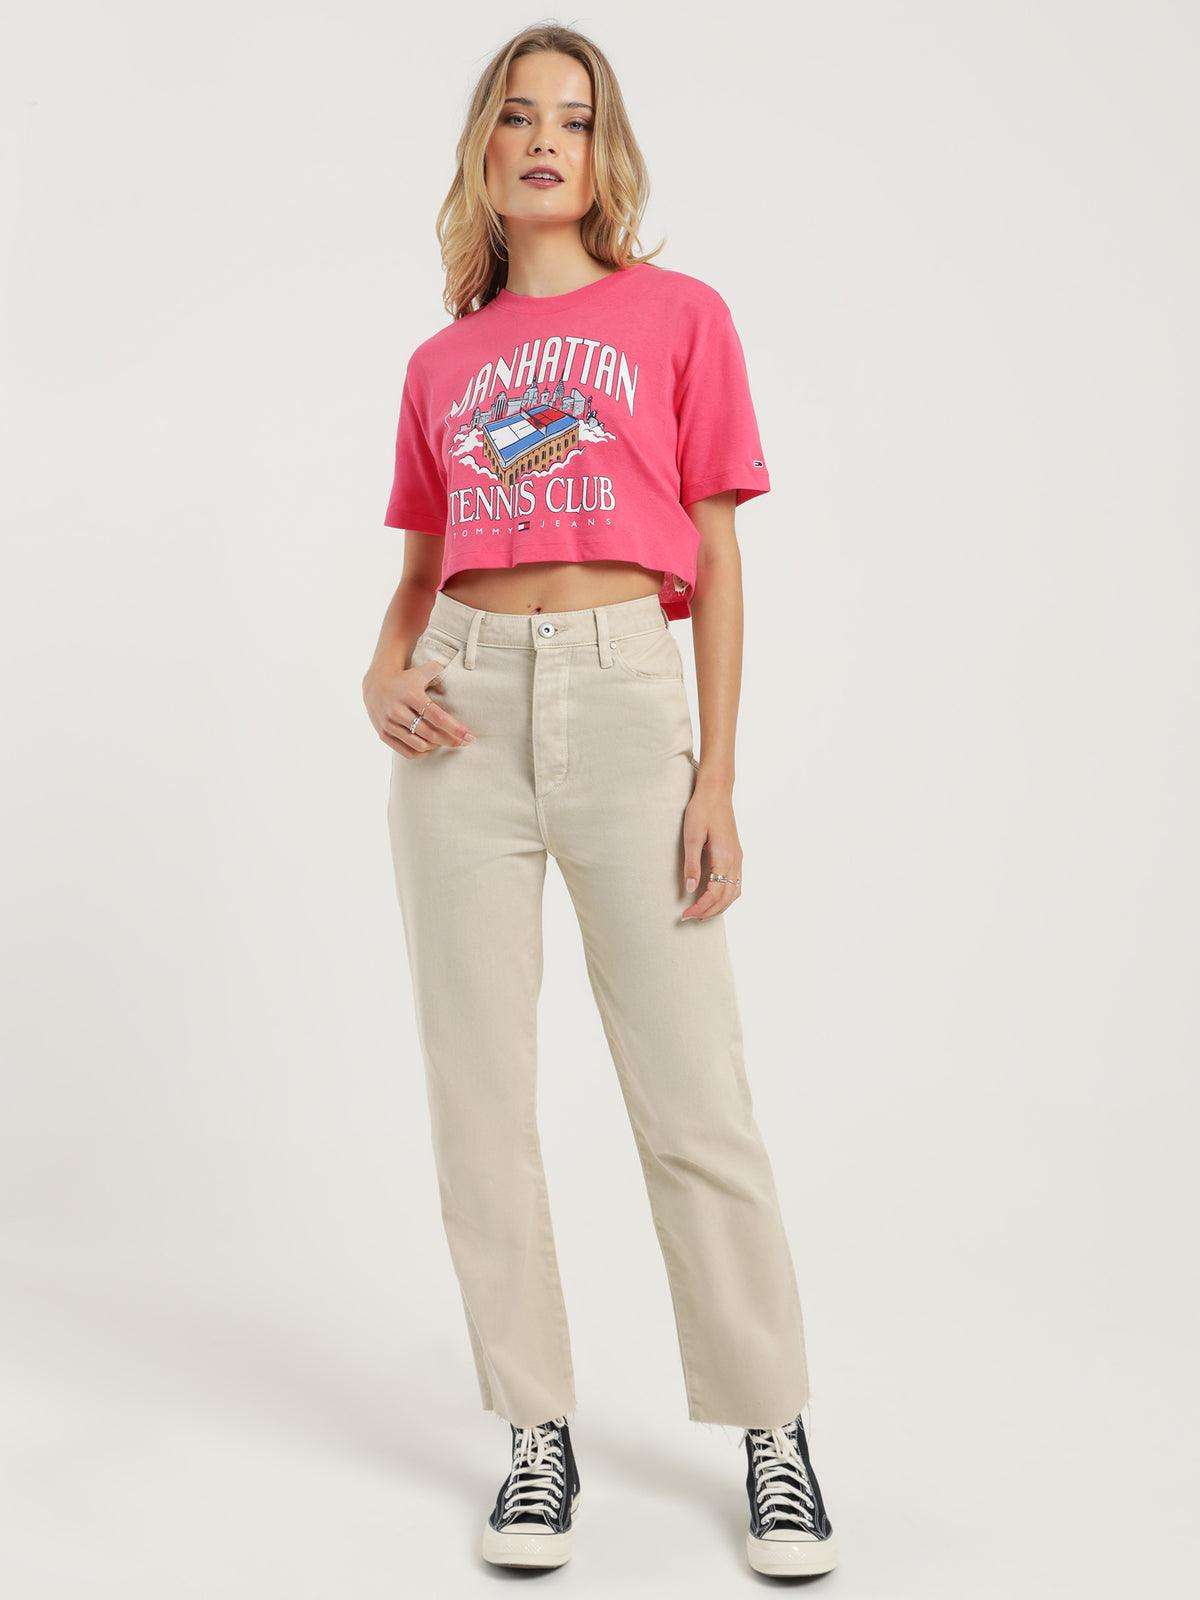 Super Crop Tommy Jeans Tennis Short Sleeve T-Shirt in Pink Alert